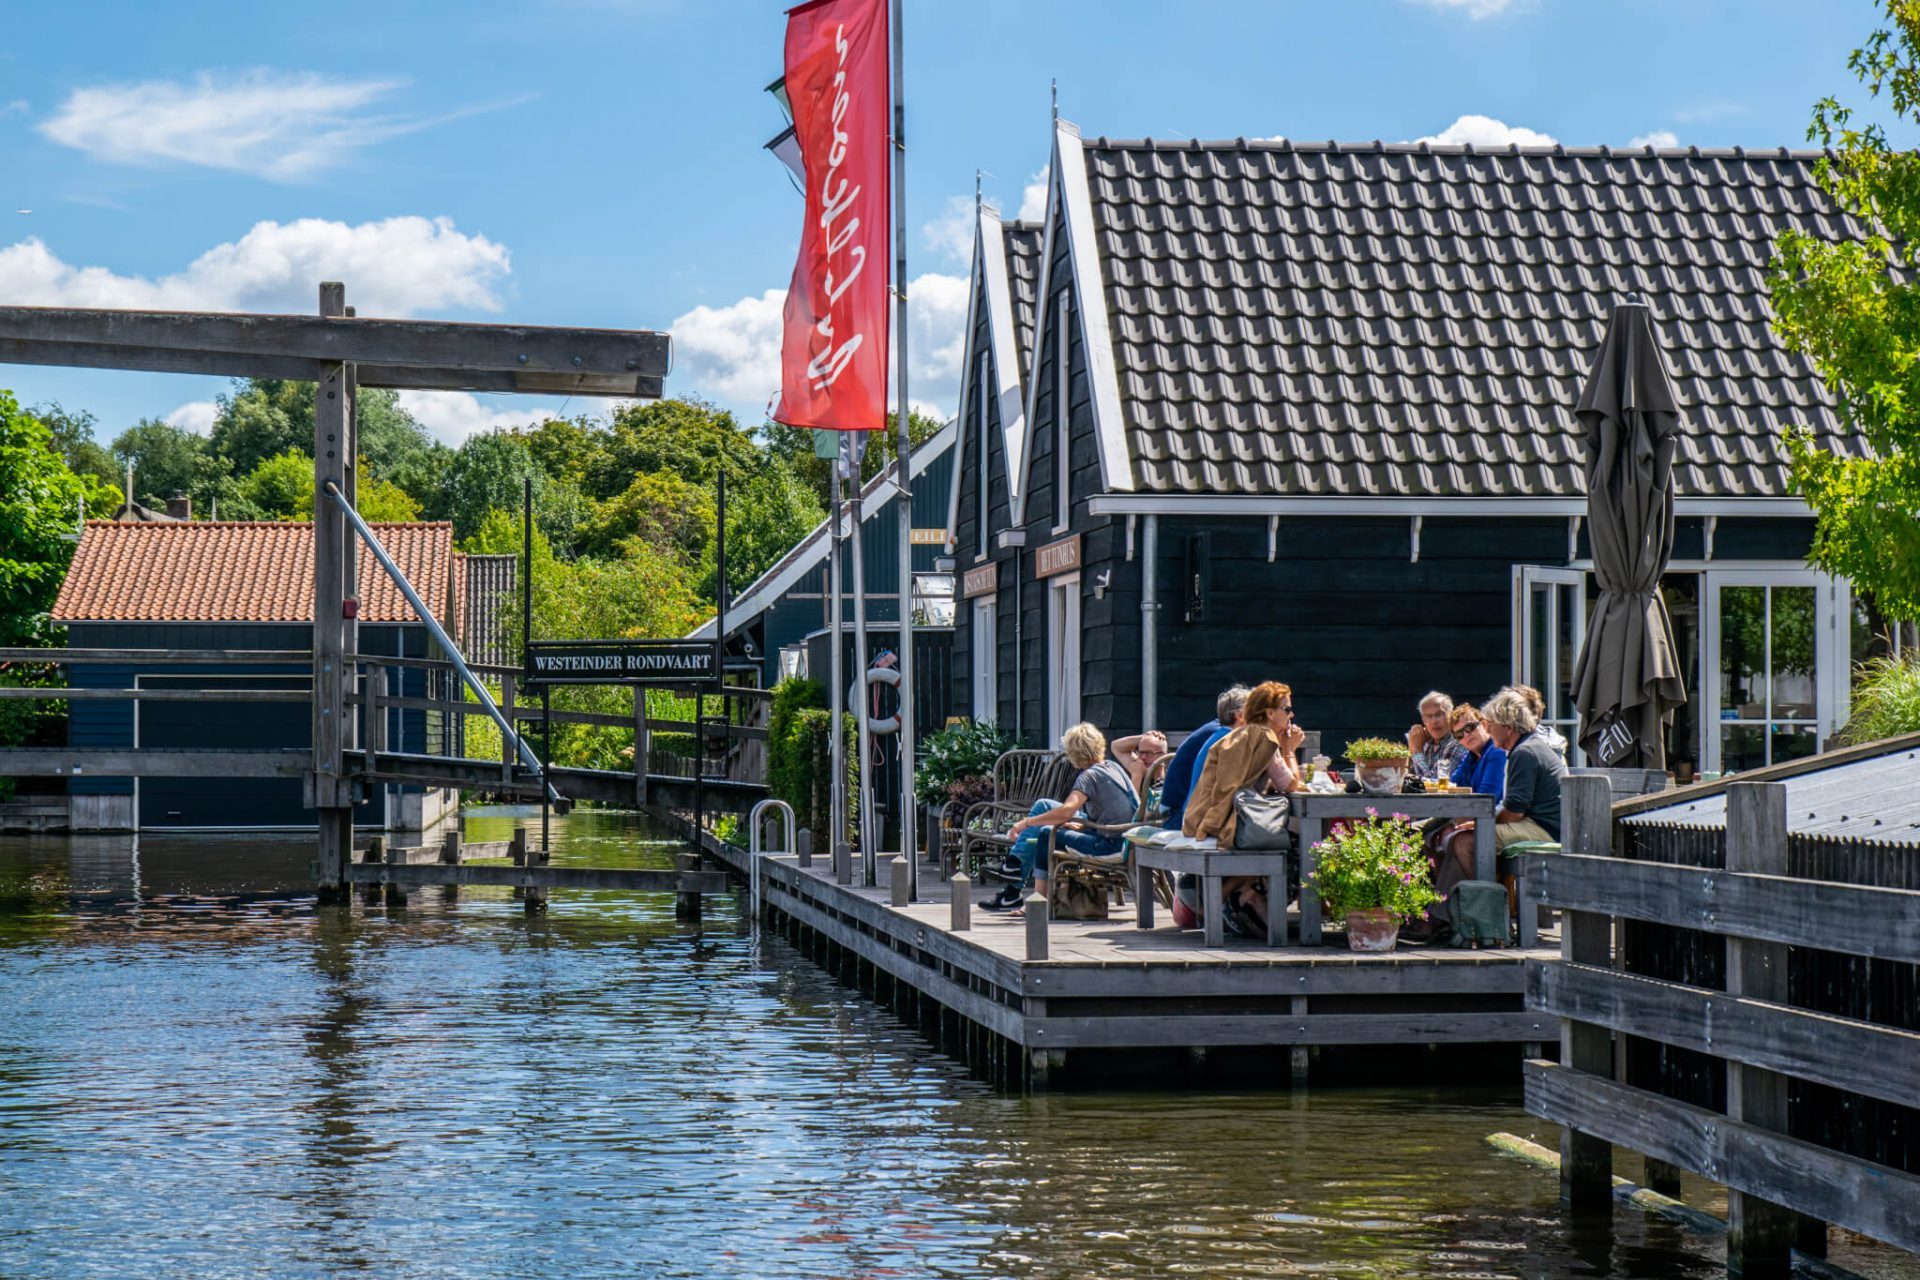 Aalsmeer Canal Cruise with Westeinder Rondvaart